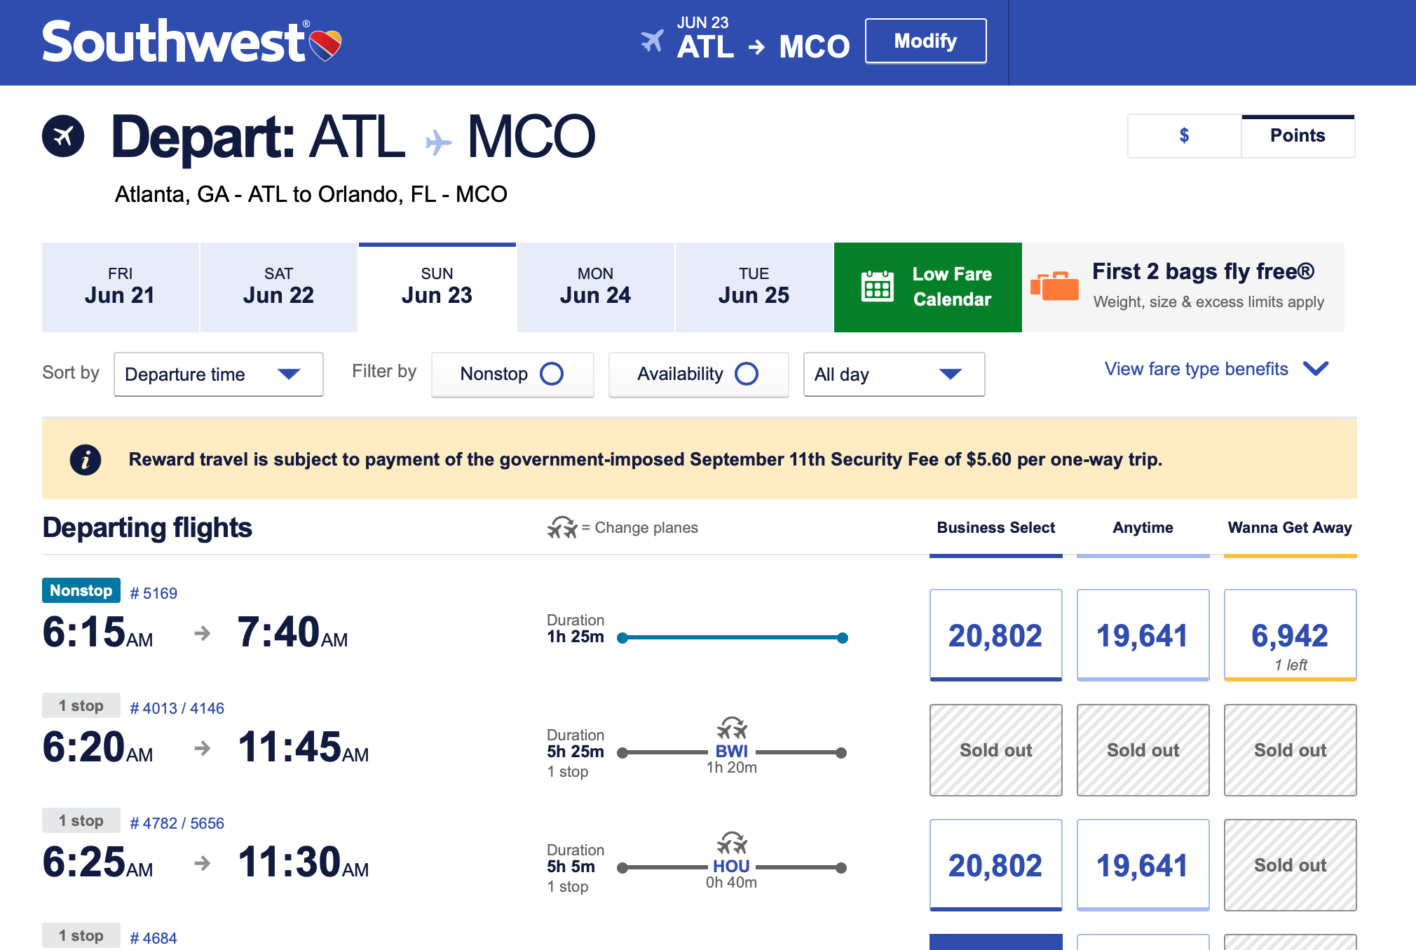 The Best Ways to Fly from Atlanta (ATL) to Orlando (MCO) 2022